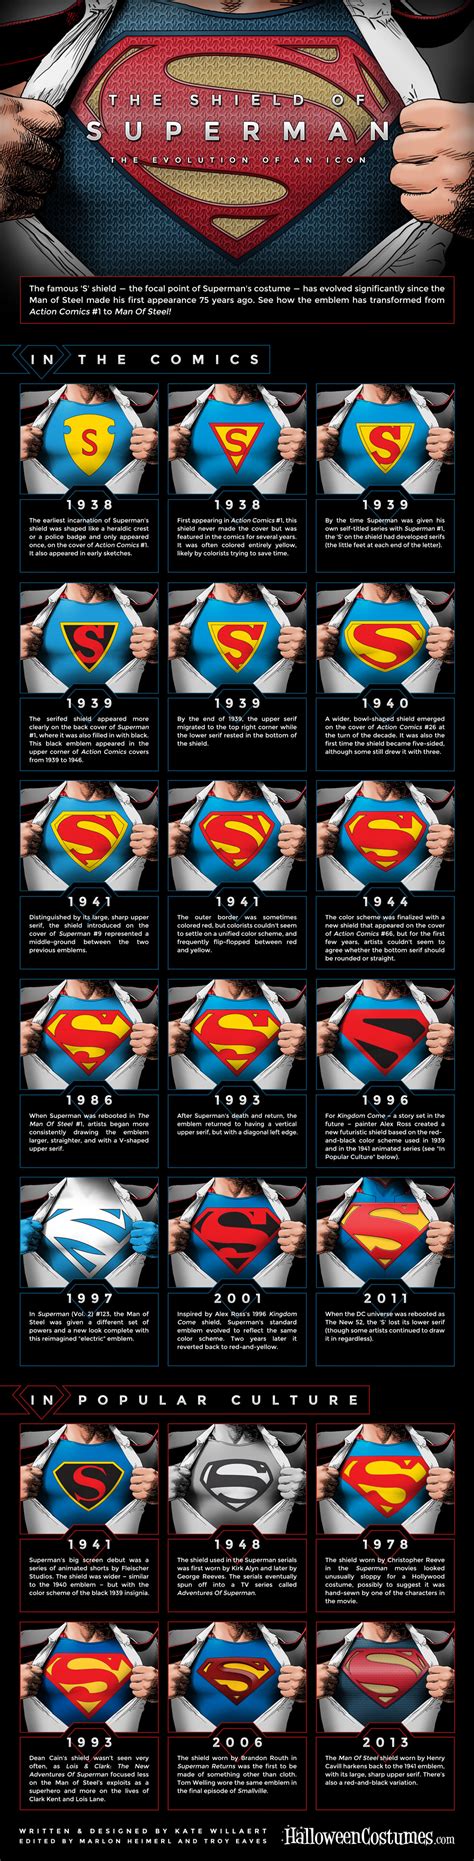 Superman-Logo - Superman logo - qaz.wiki